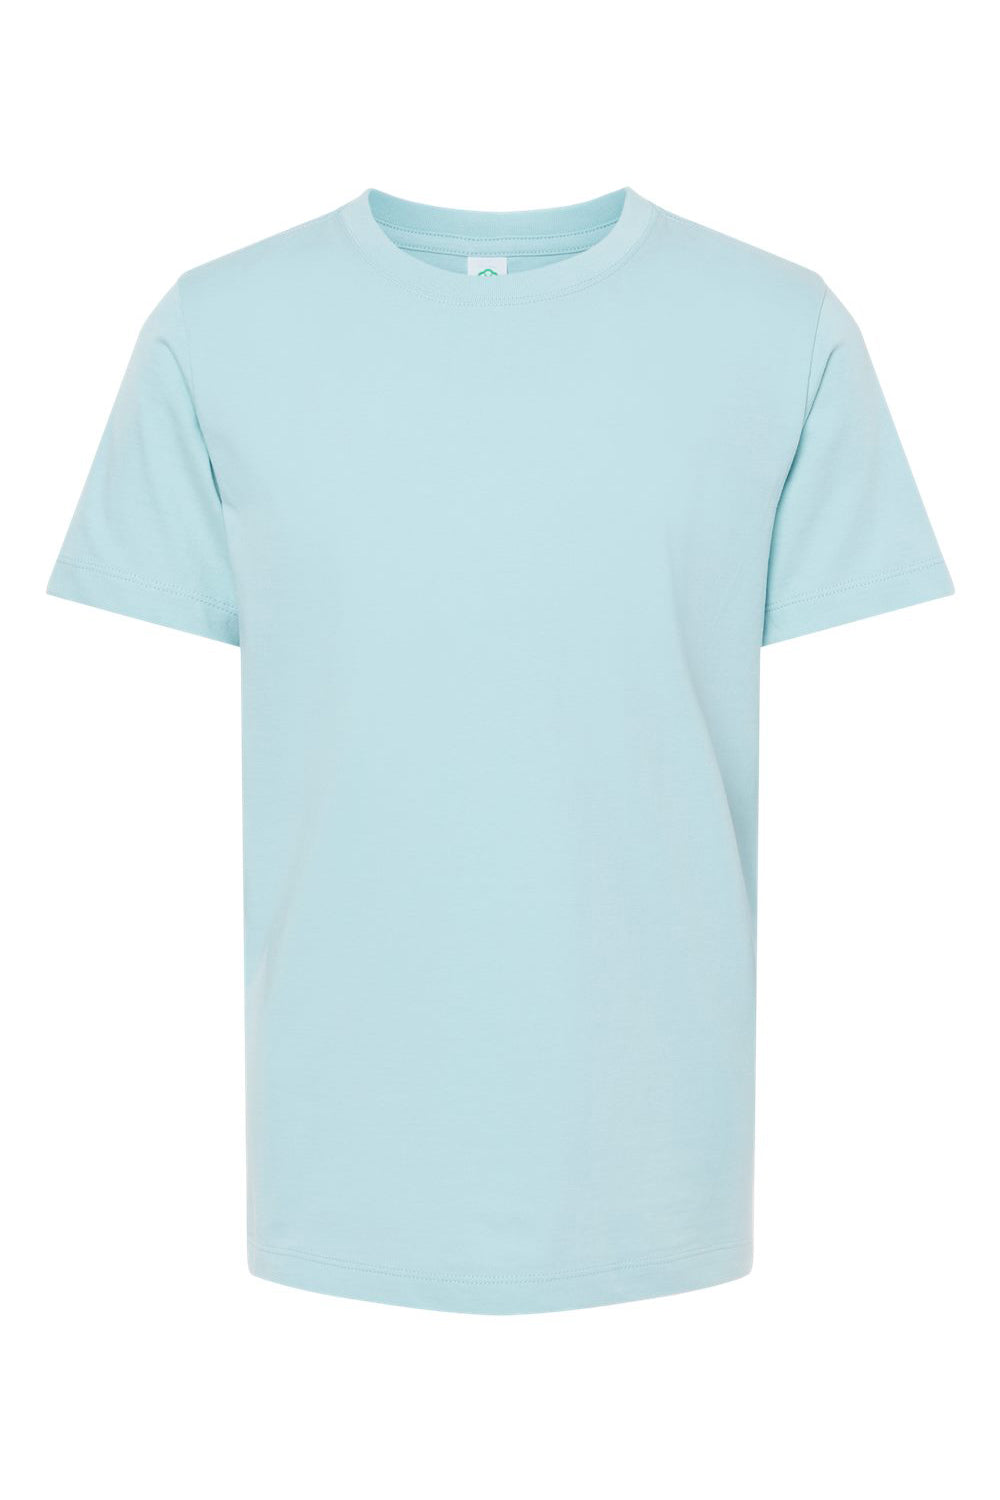 SoftShirts 402 Youth Organic Short Sleeve Crewneck T-Shirt Chambray Blue Flat Front